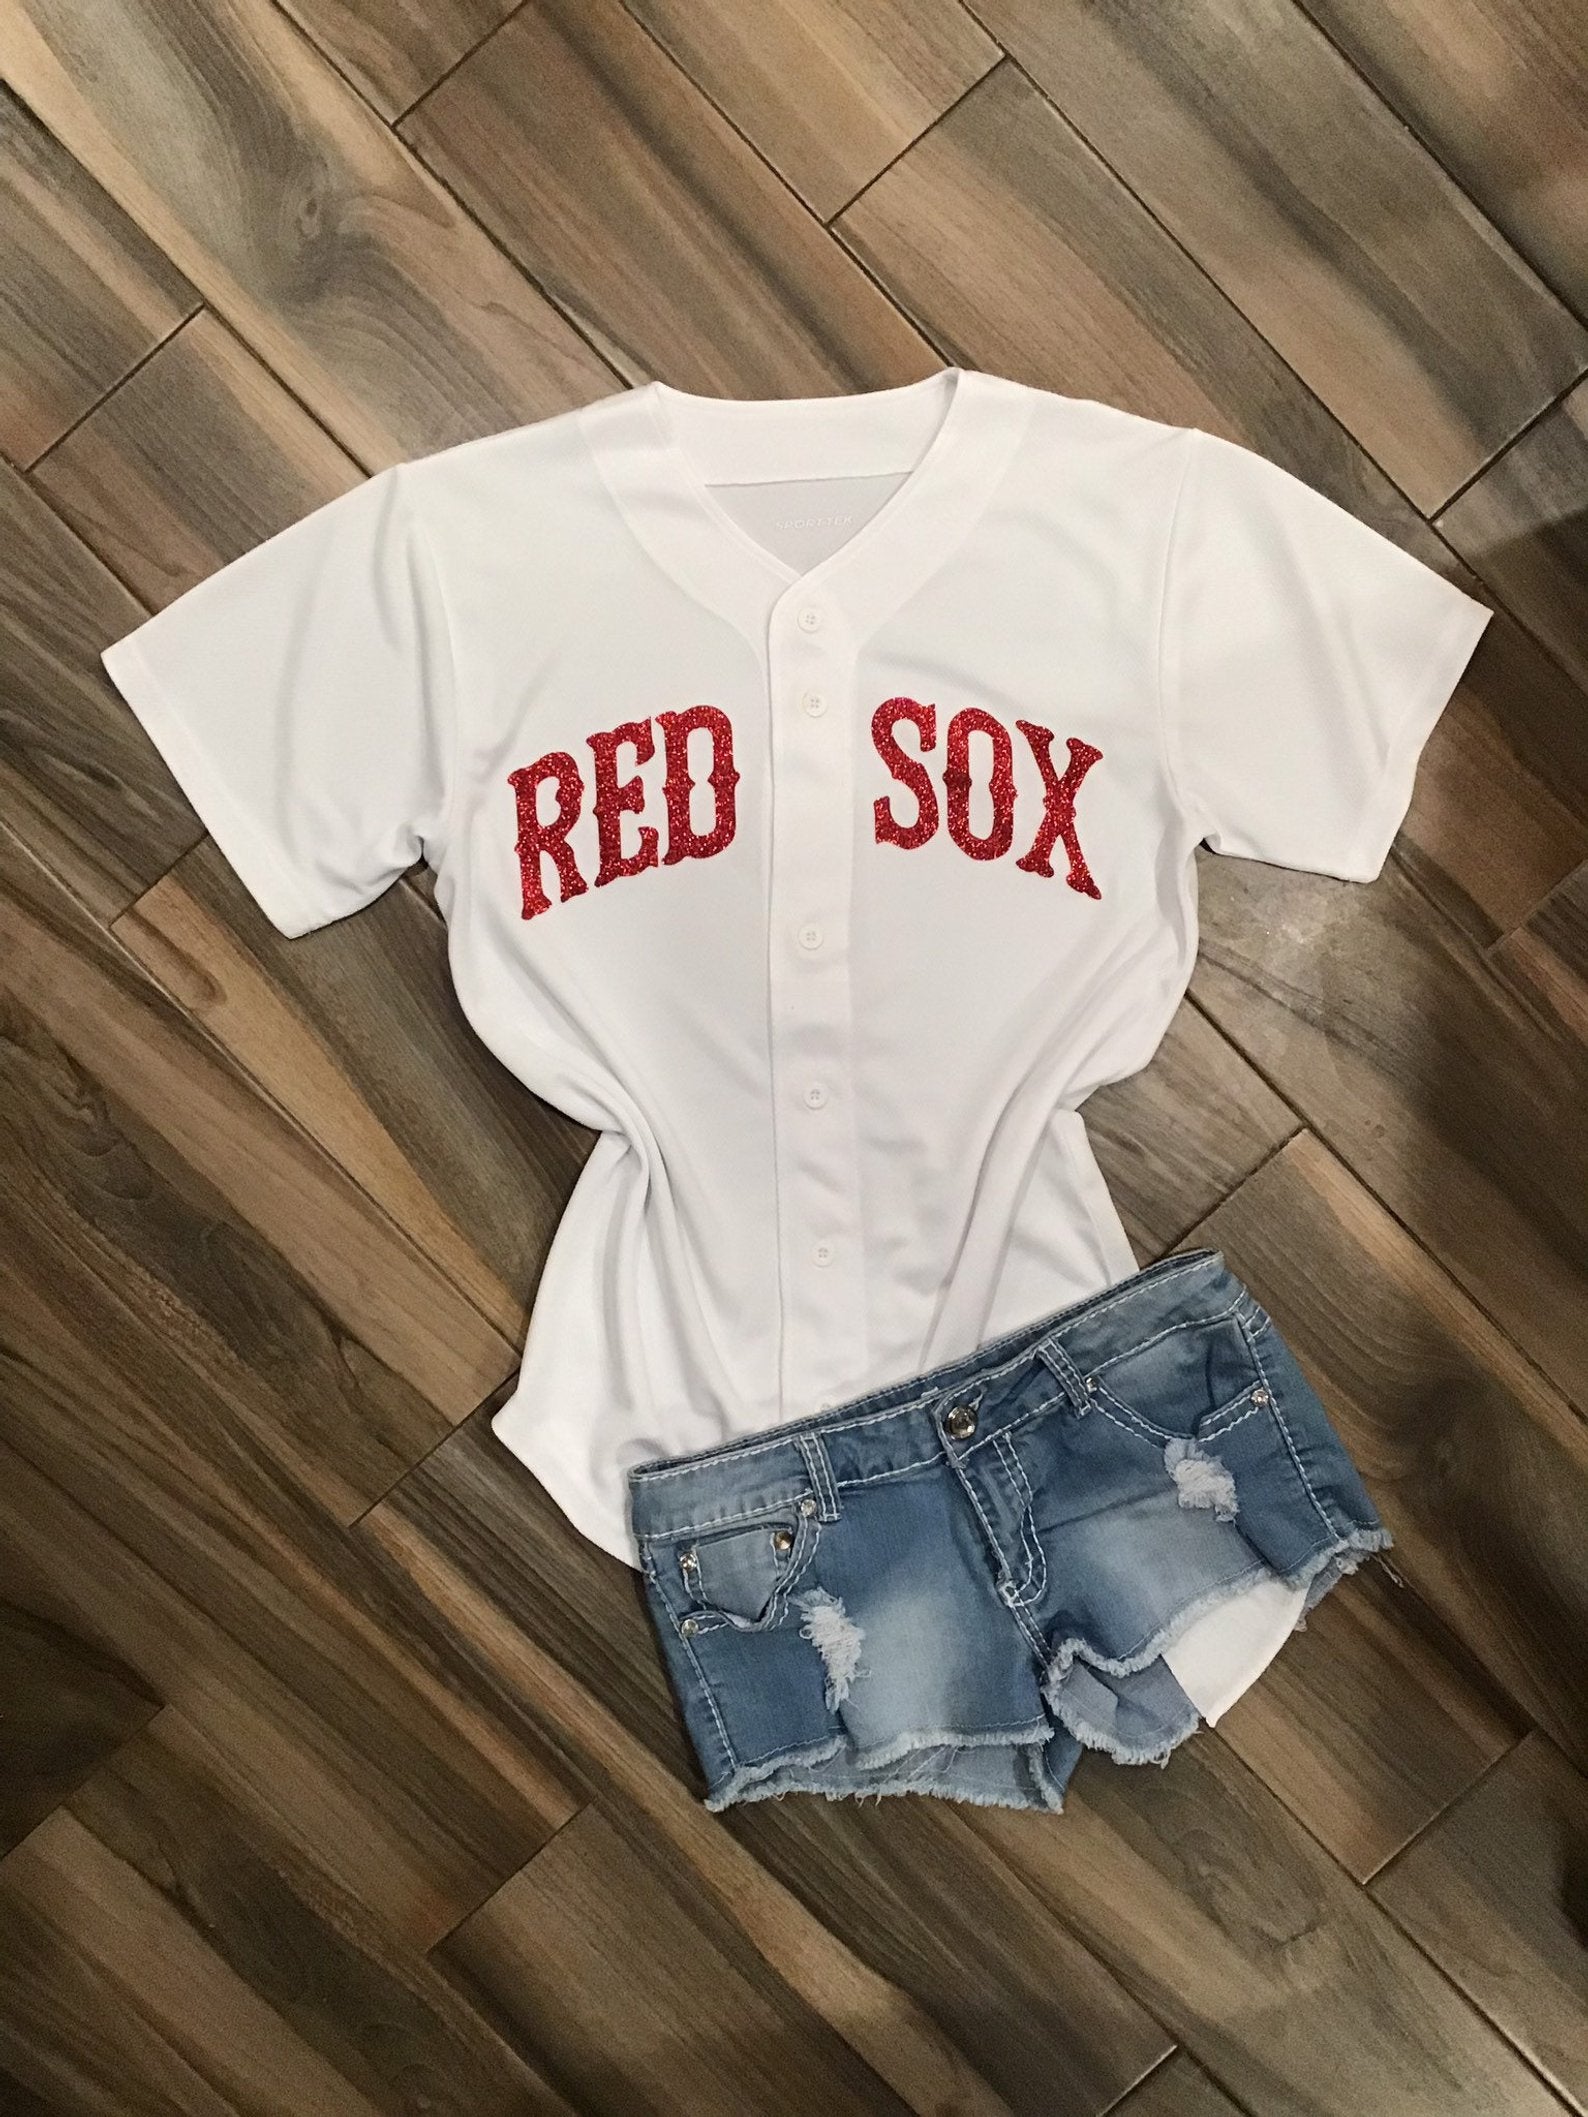 Boston Red Sox Inspired Baseball Jersey